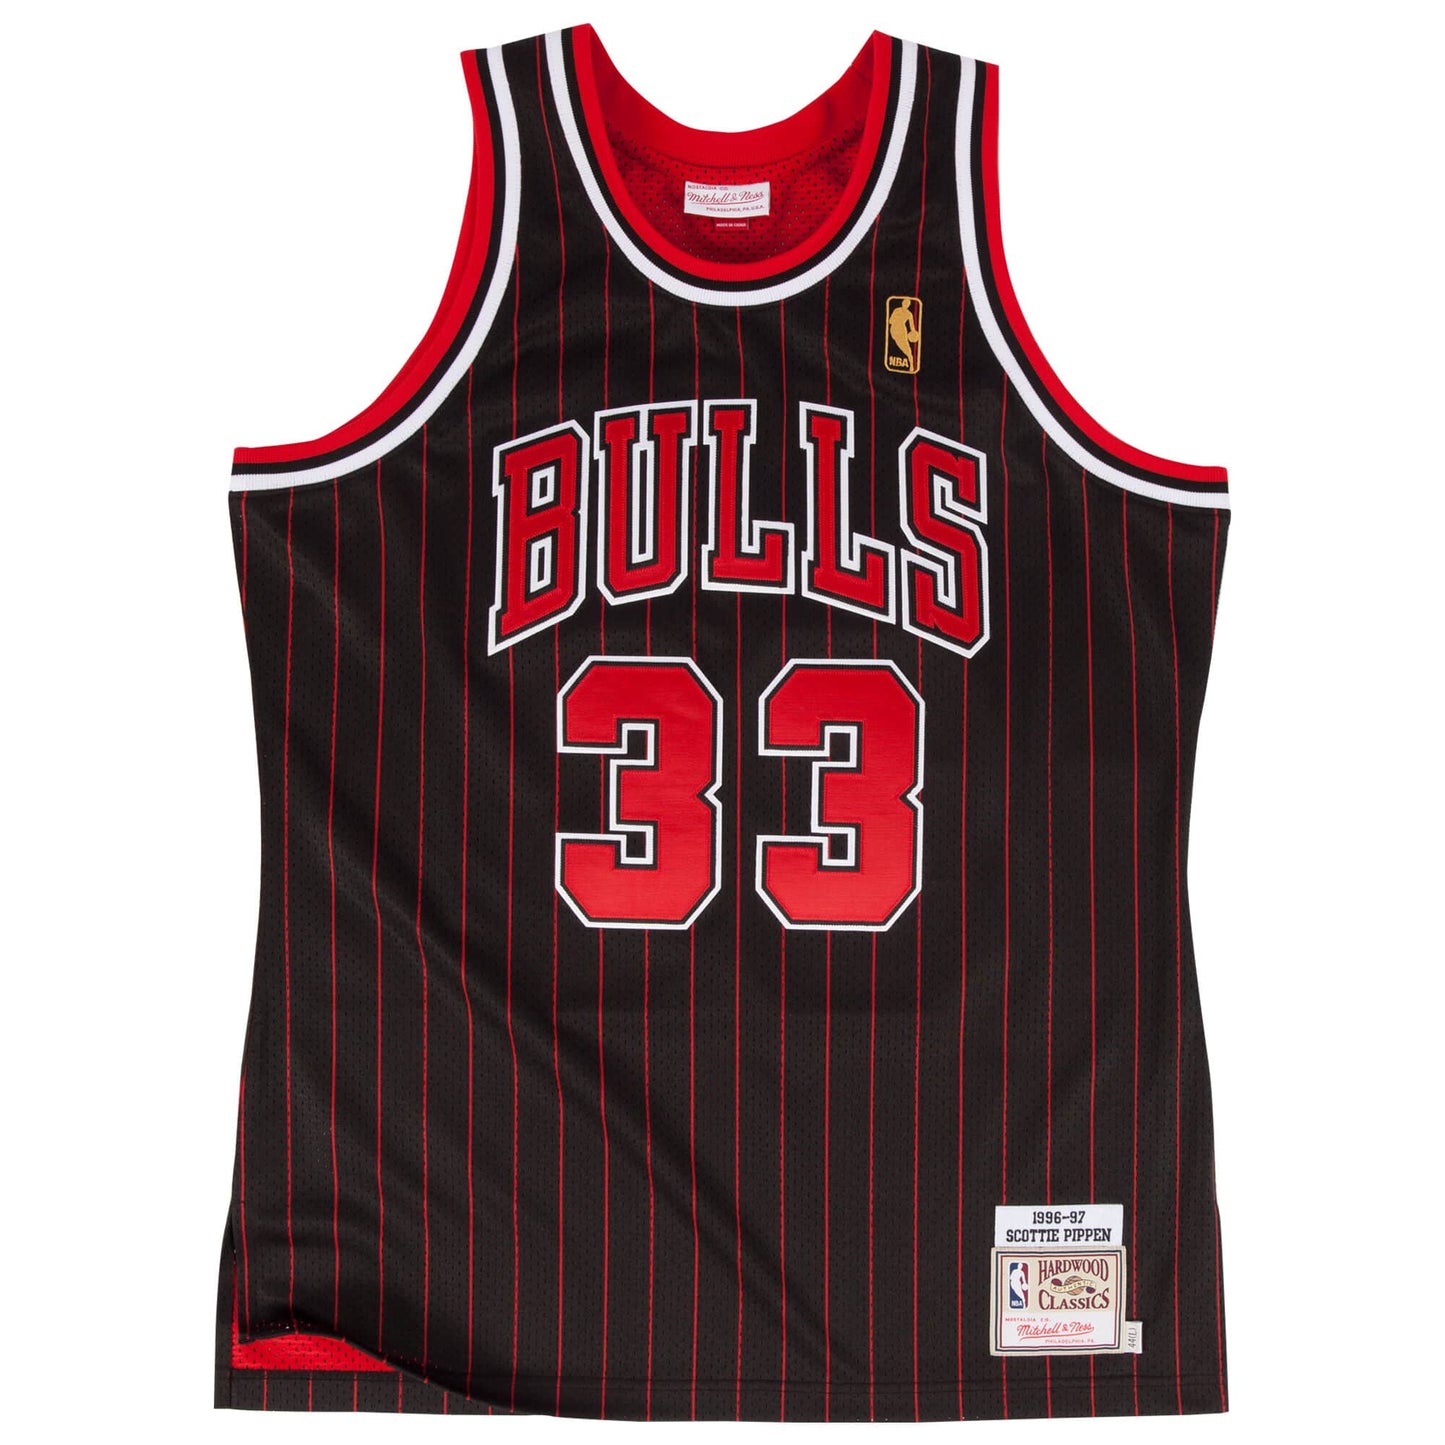 Authentic Jersey Chicago Bulls 1996-97 Scottie Pippen